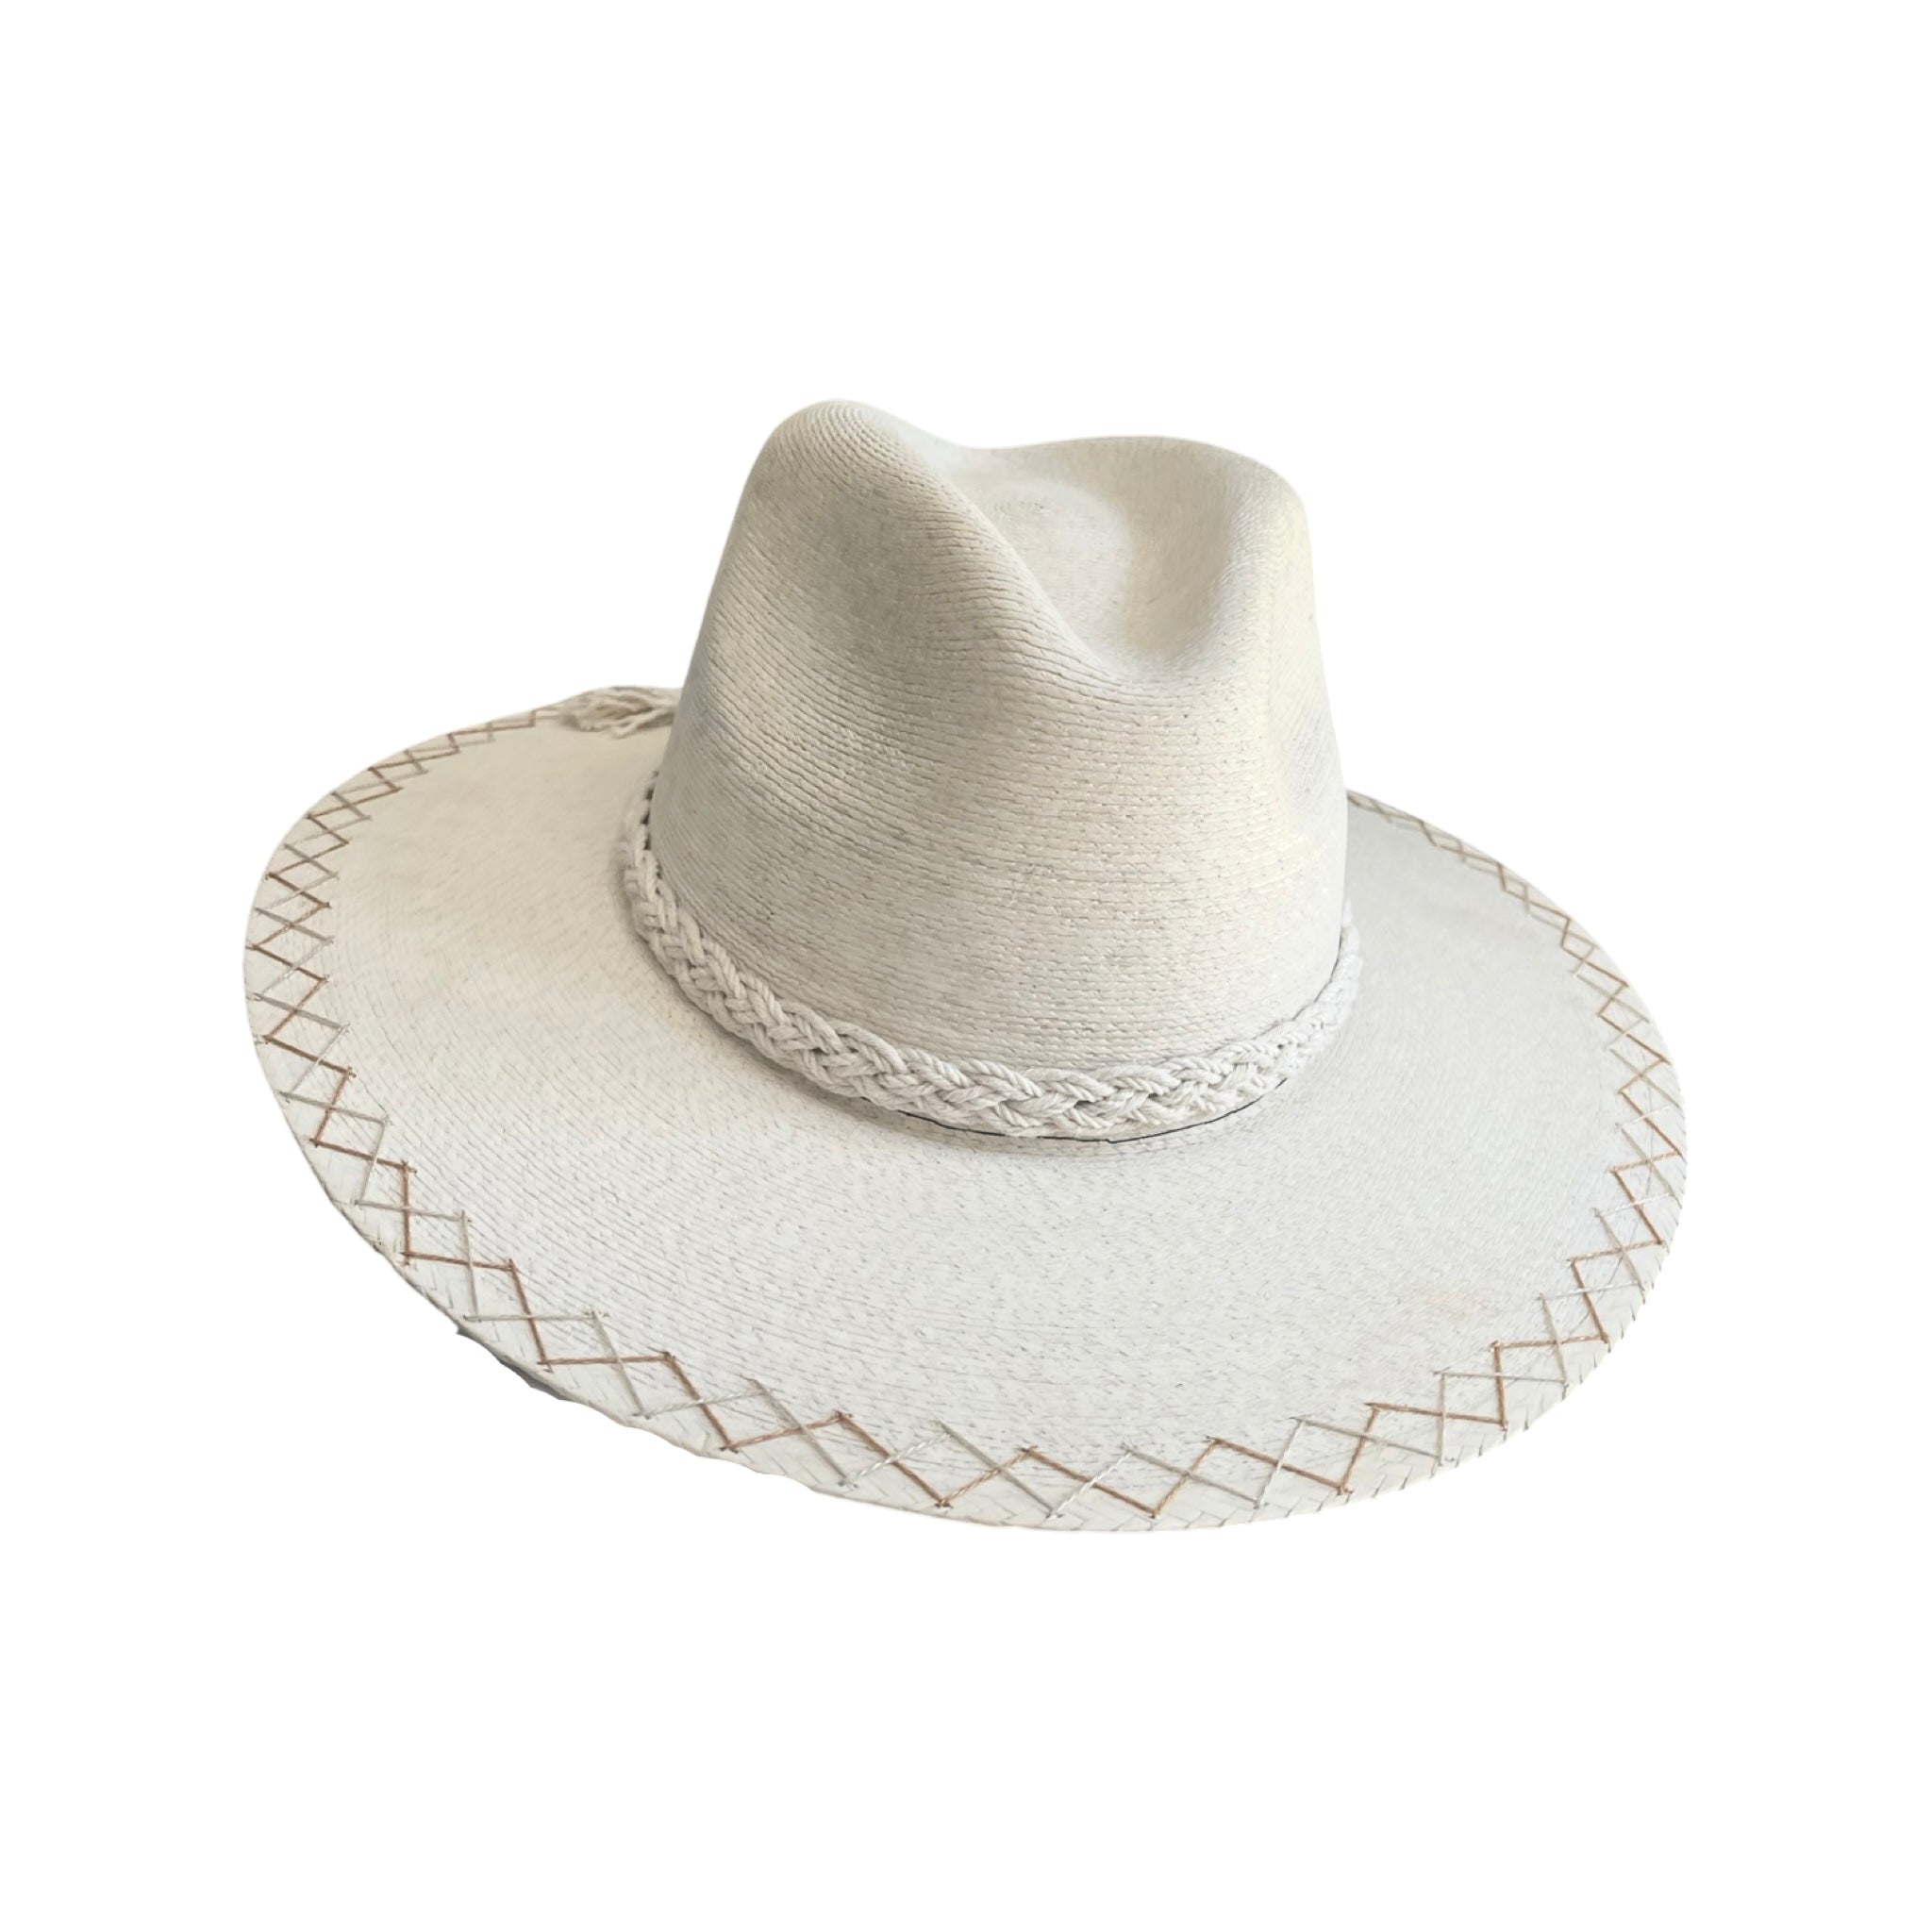 Exclusive La Palma Hat by Corazon Playero